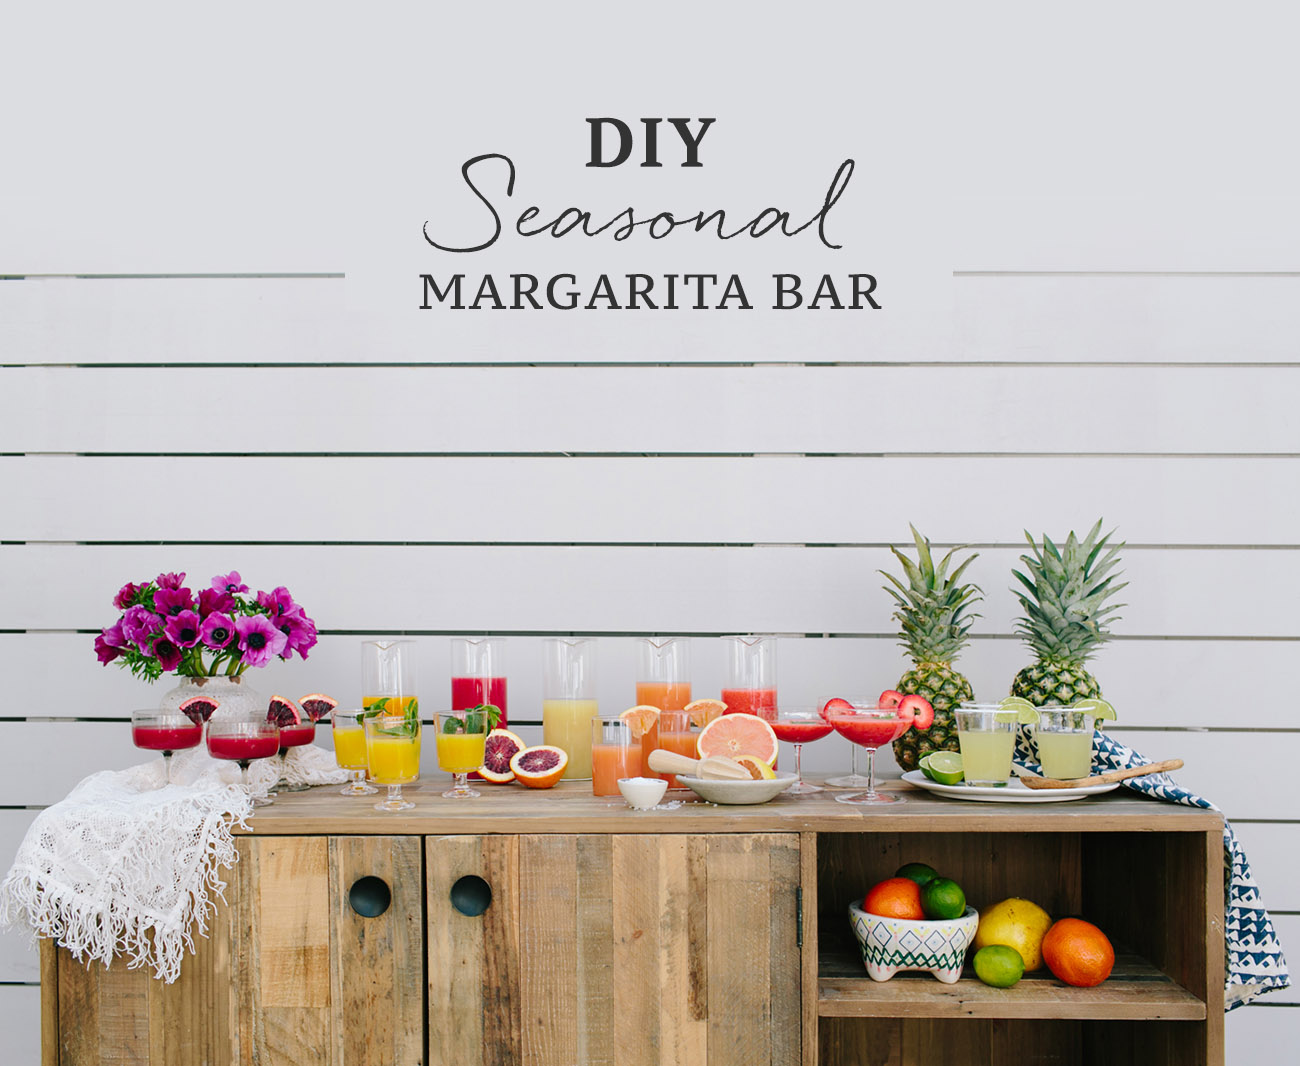 DIY Seasonal Margarita Bar